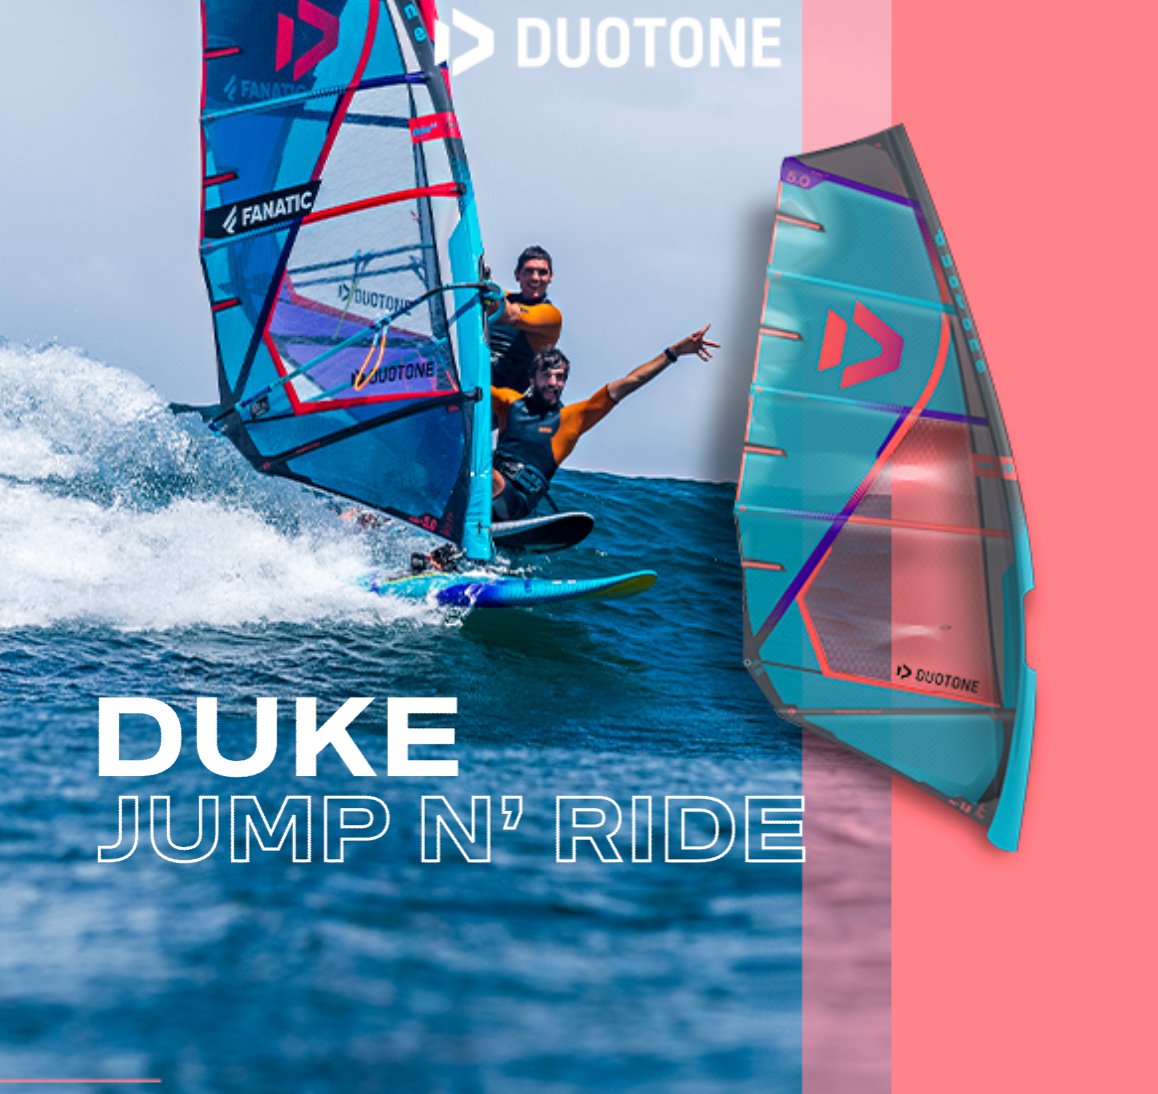 DUKE - The Legend Returns to the Duotone Range! - Worthing Watersports